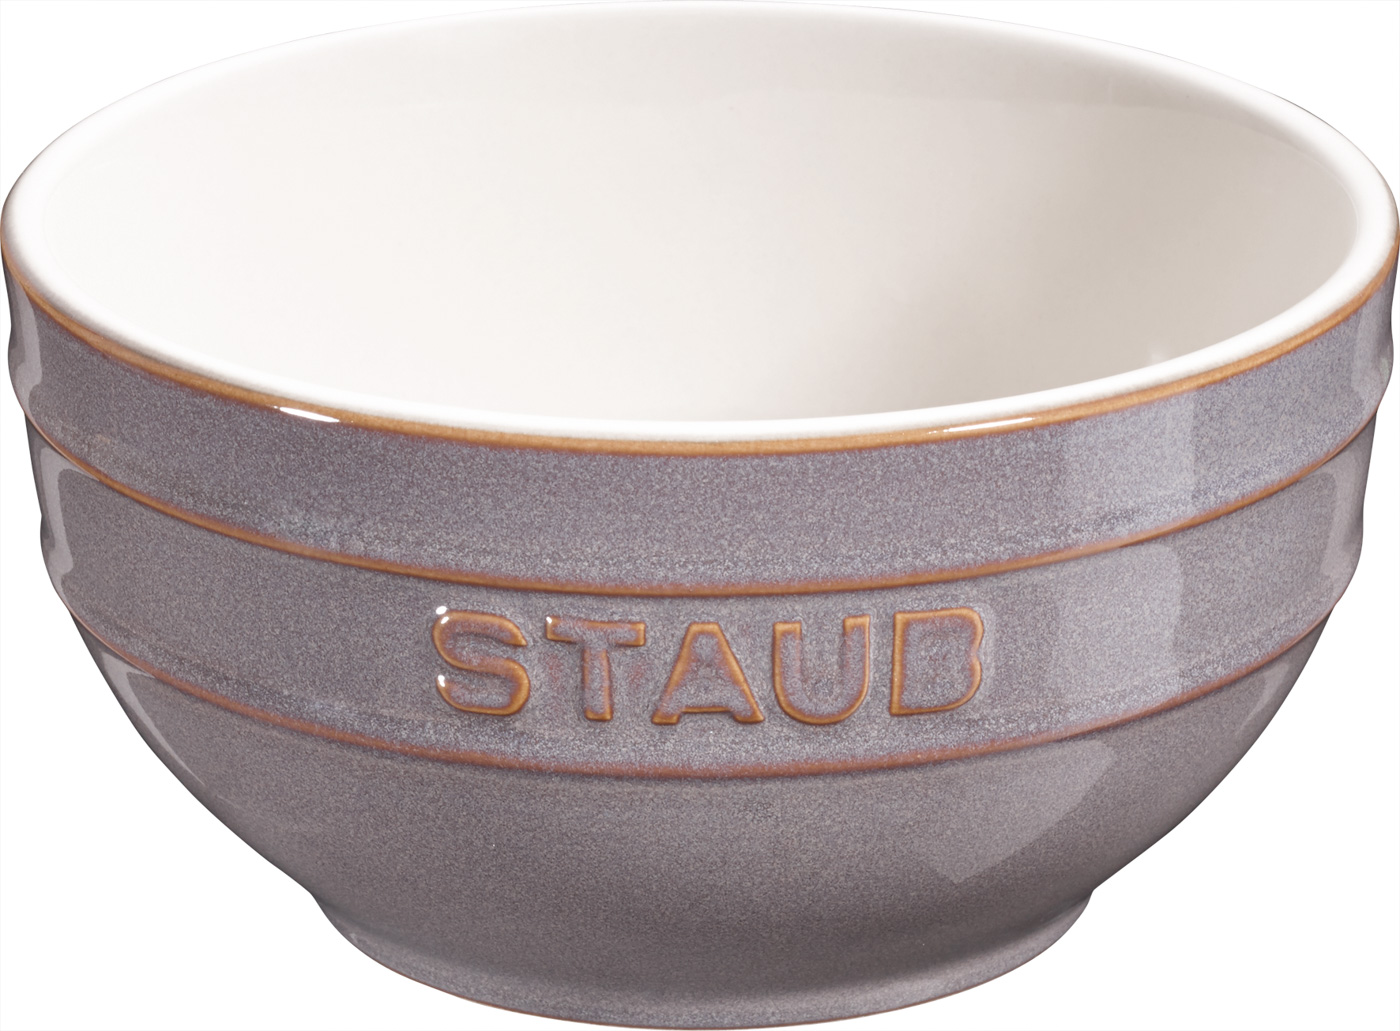 Schüssel, 14 cm, Antik-Grau, Keramik, Serie: Ceramique. Marke: Staub